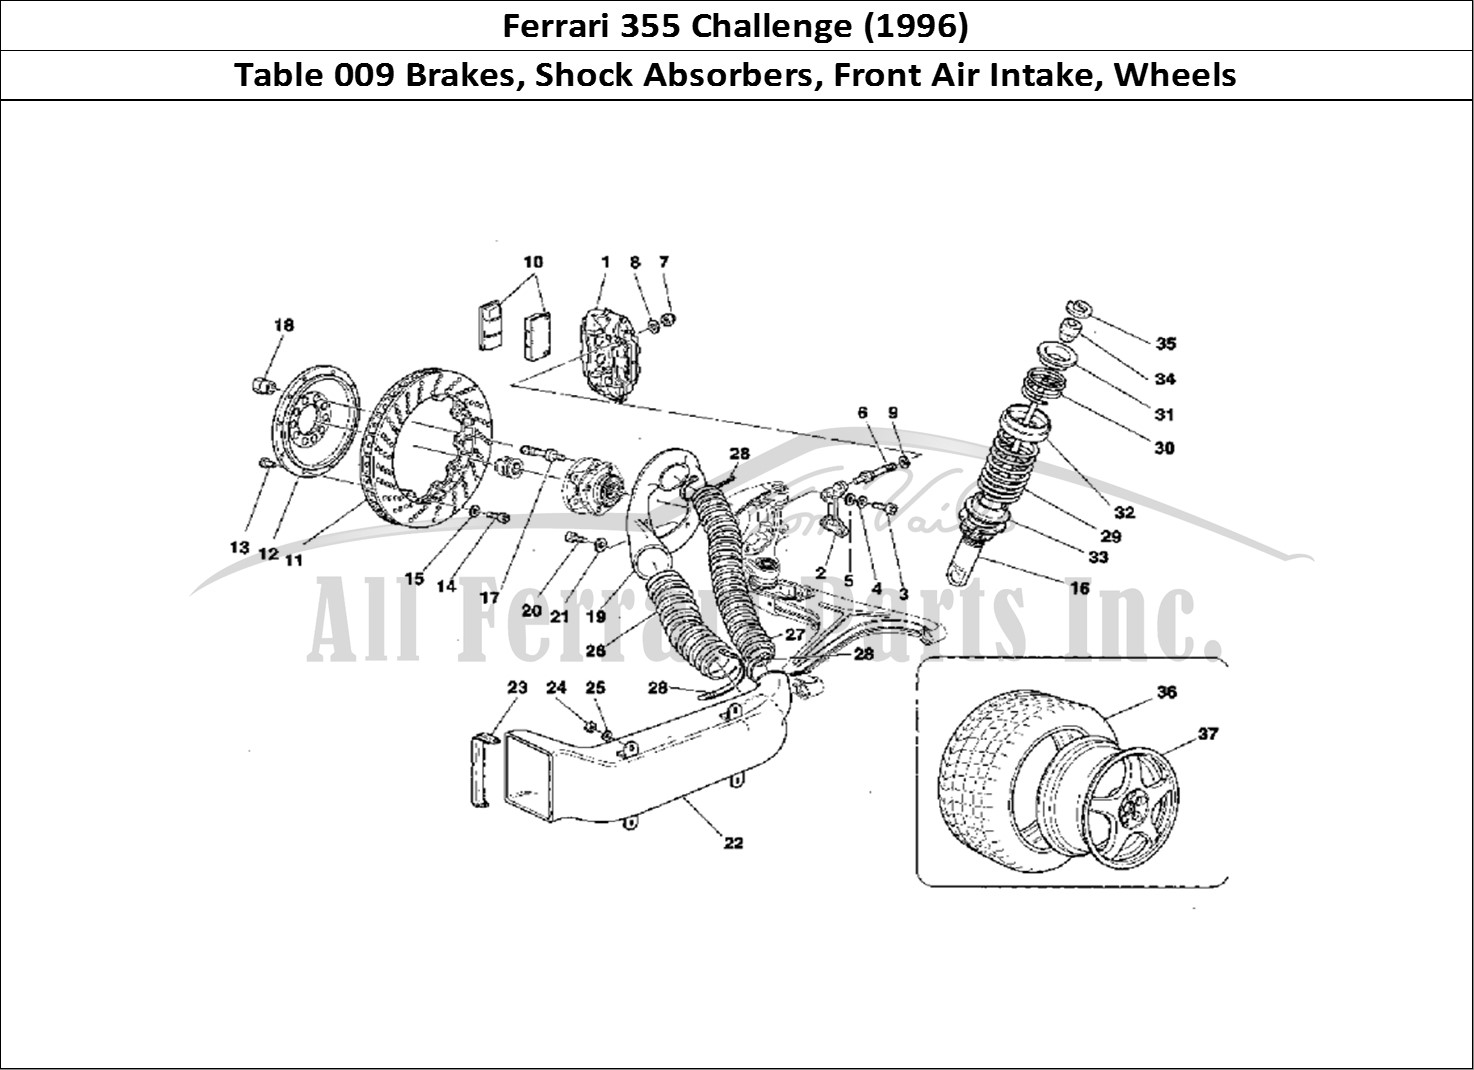 Ferrari Parts Ferrari 355 Challenge (1996) Page 009 Brakes - Shock Absorbers